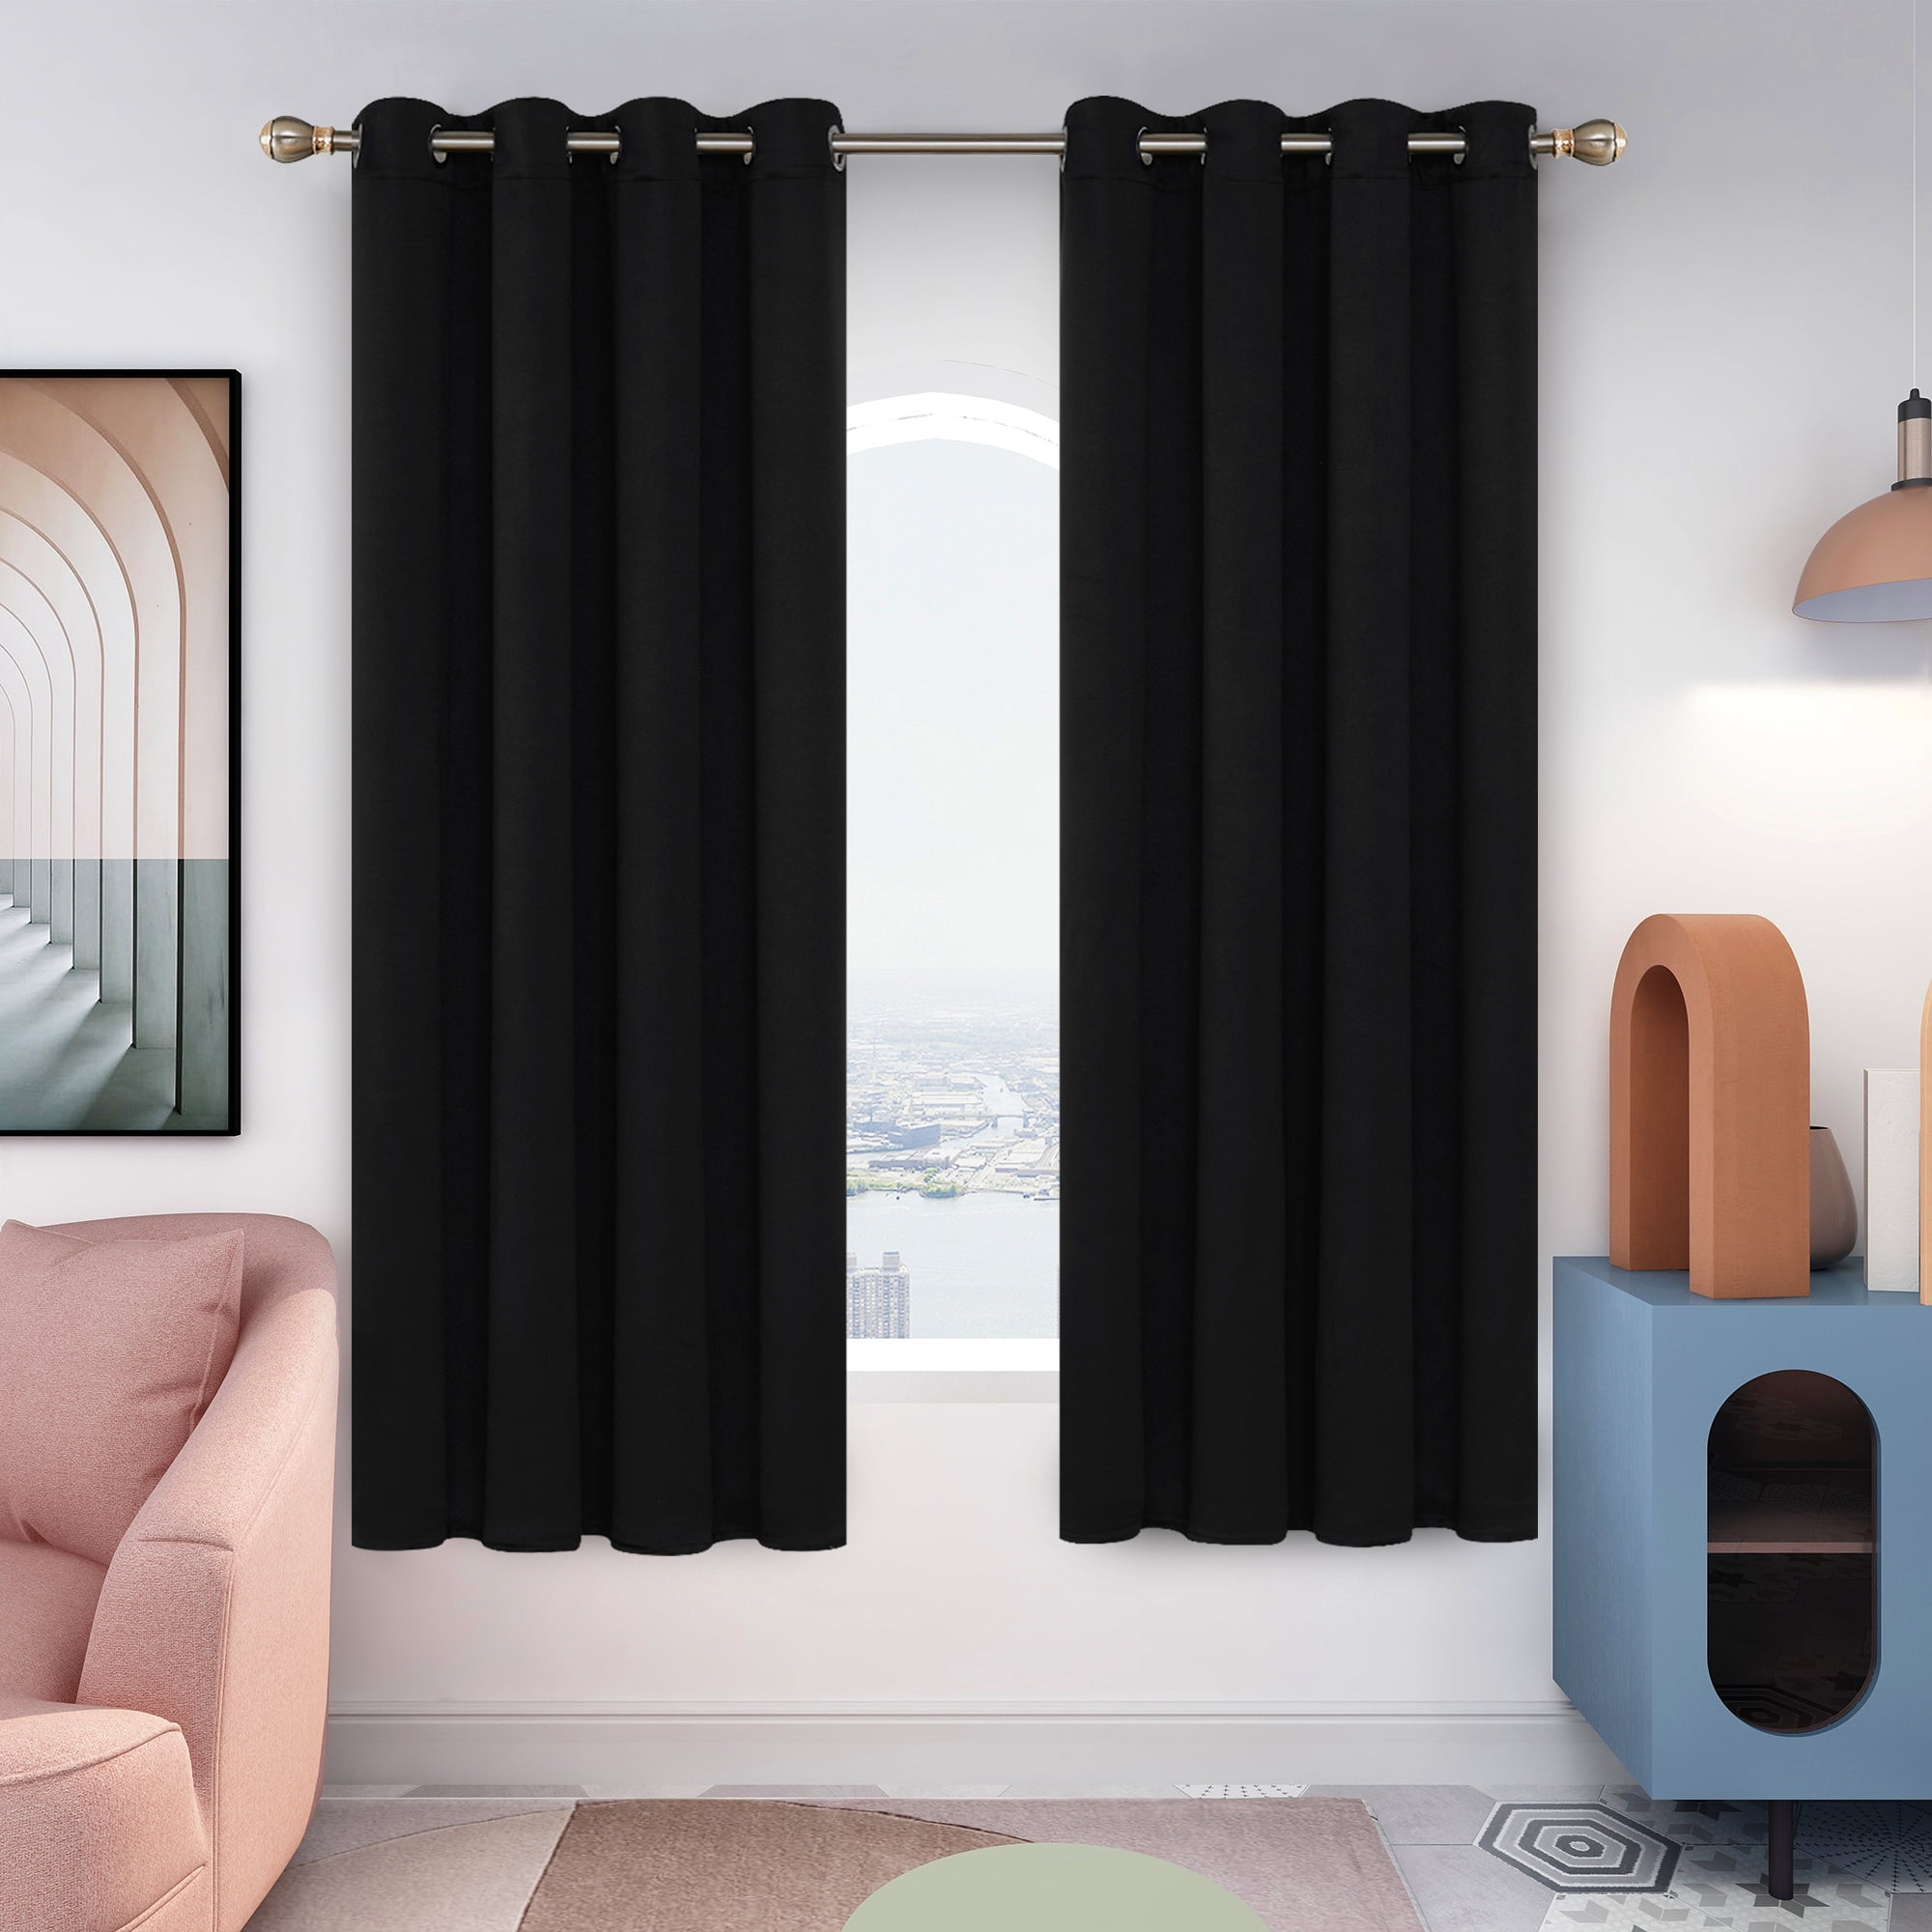 3D Door Window Curtain Panel Drape Bedroom Valance Home Living Room Hotel Decor 